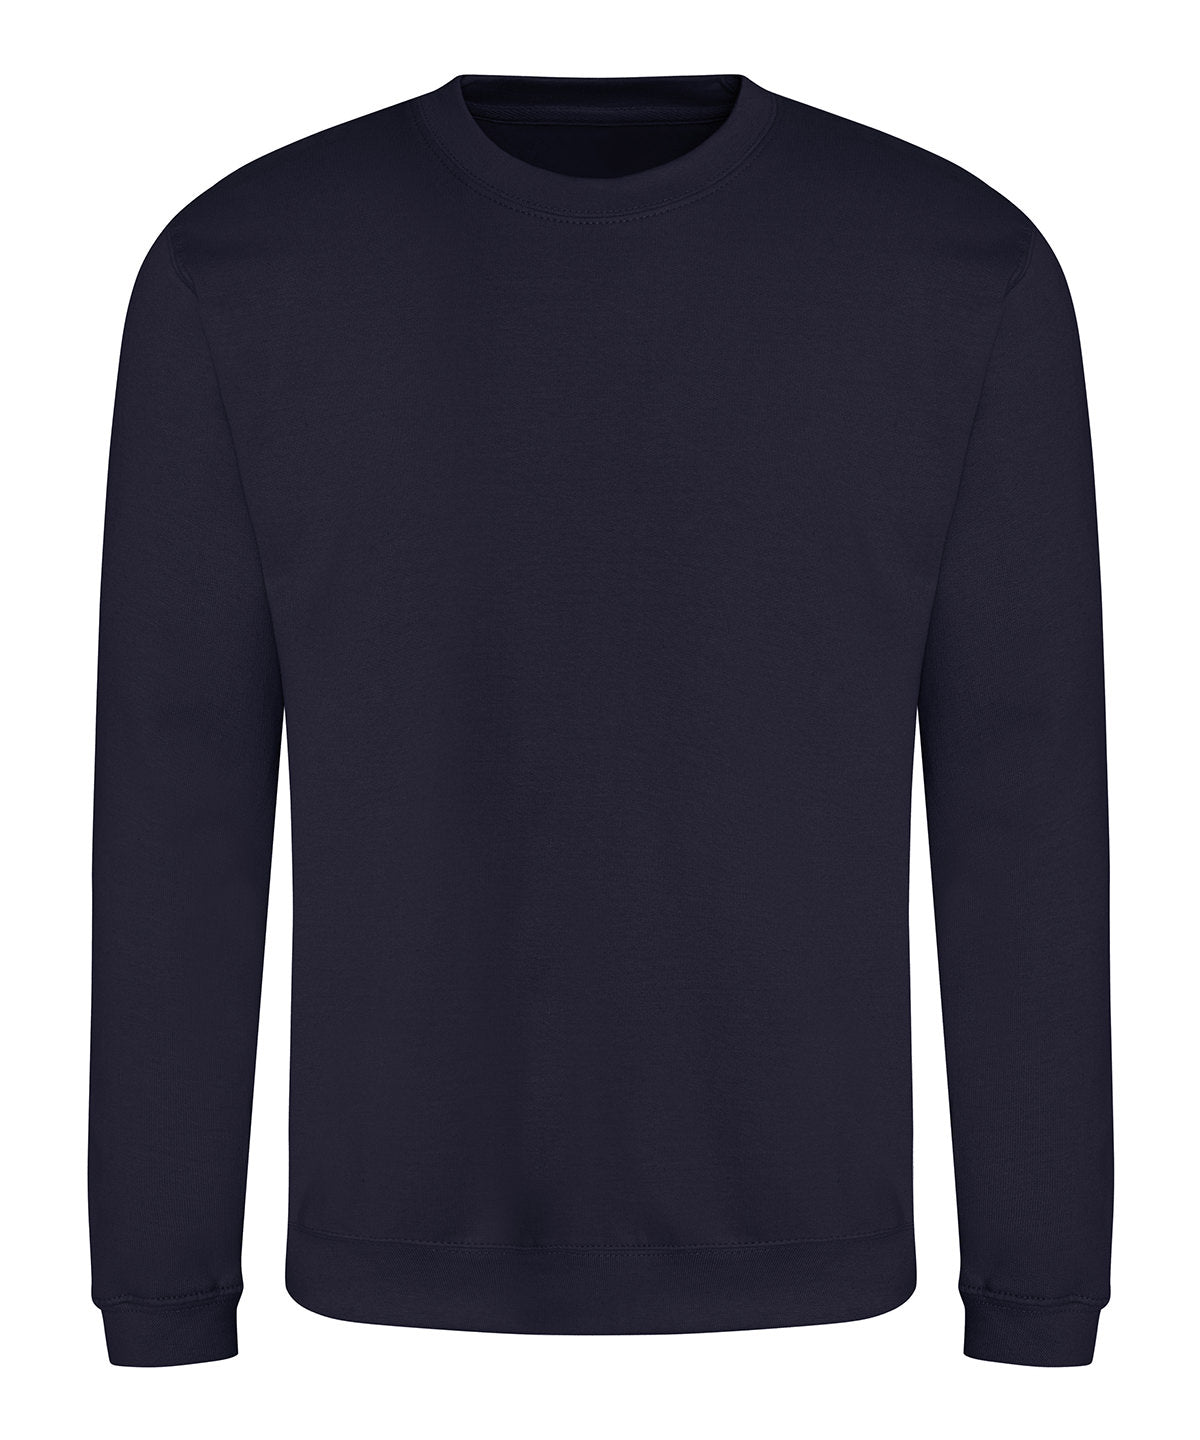 Personalised Sweatshirts - Light Grey AWDis Just Hoods AWDis sweatshirt